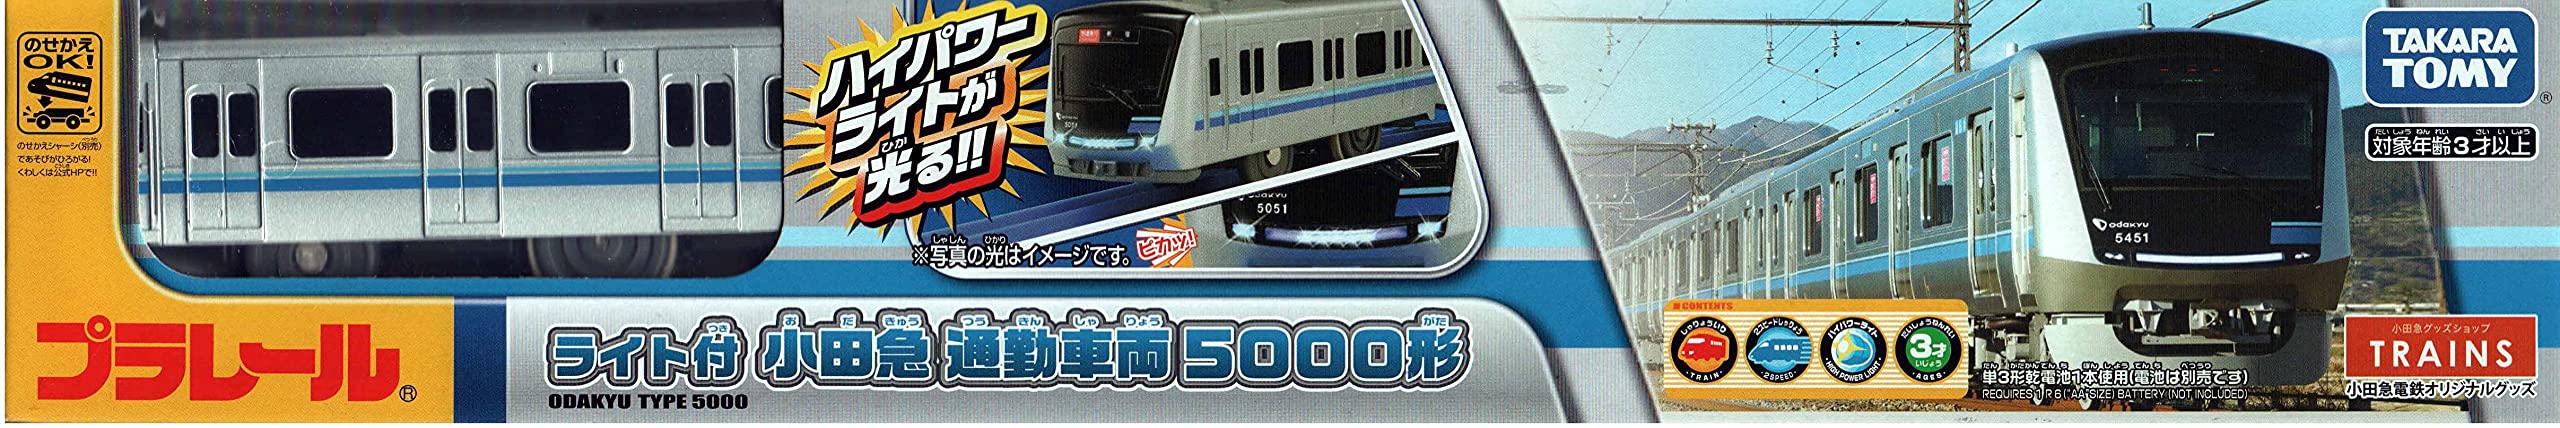 Takara Tomy Plarail Odakyu 5000 Type Light-up Commuter Vehicle Toy